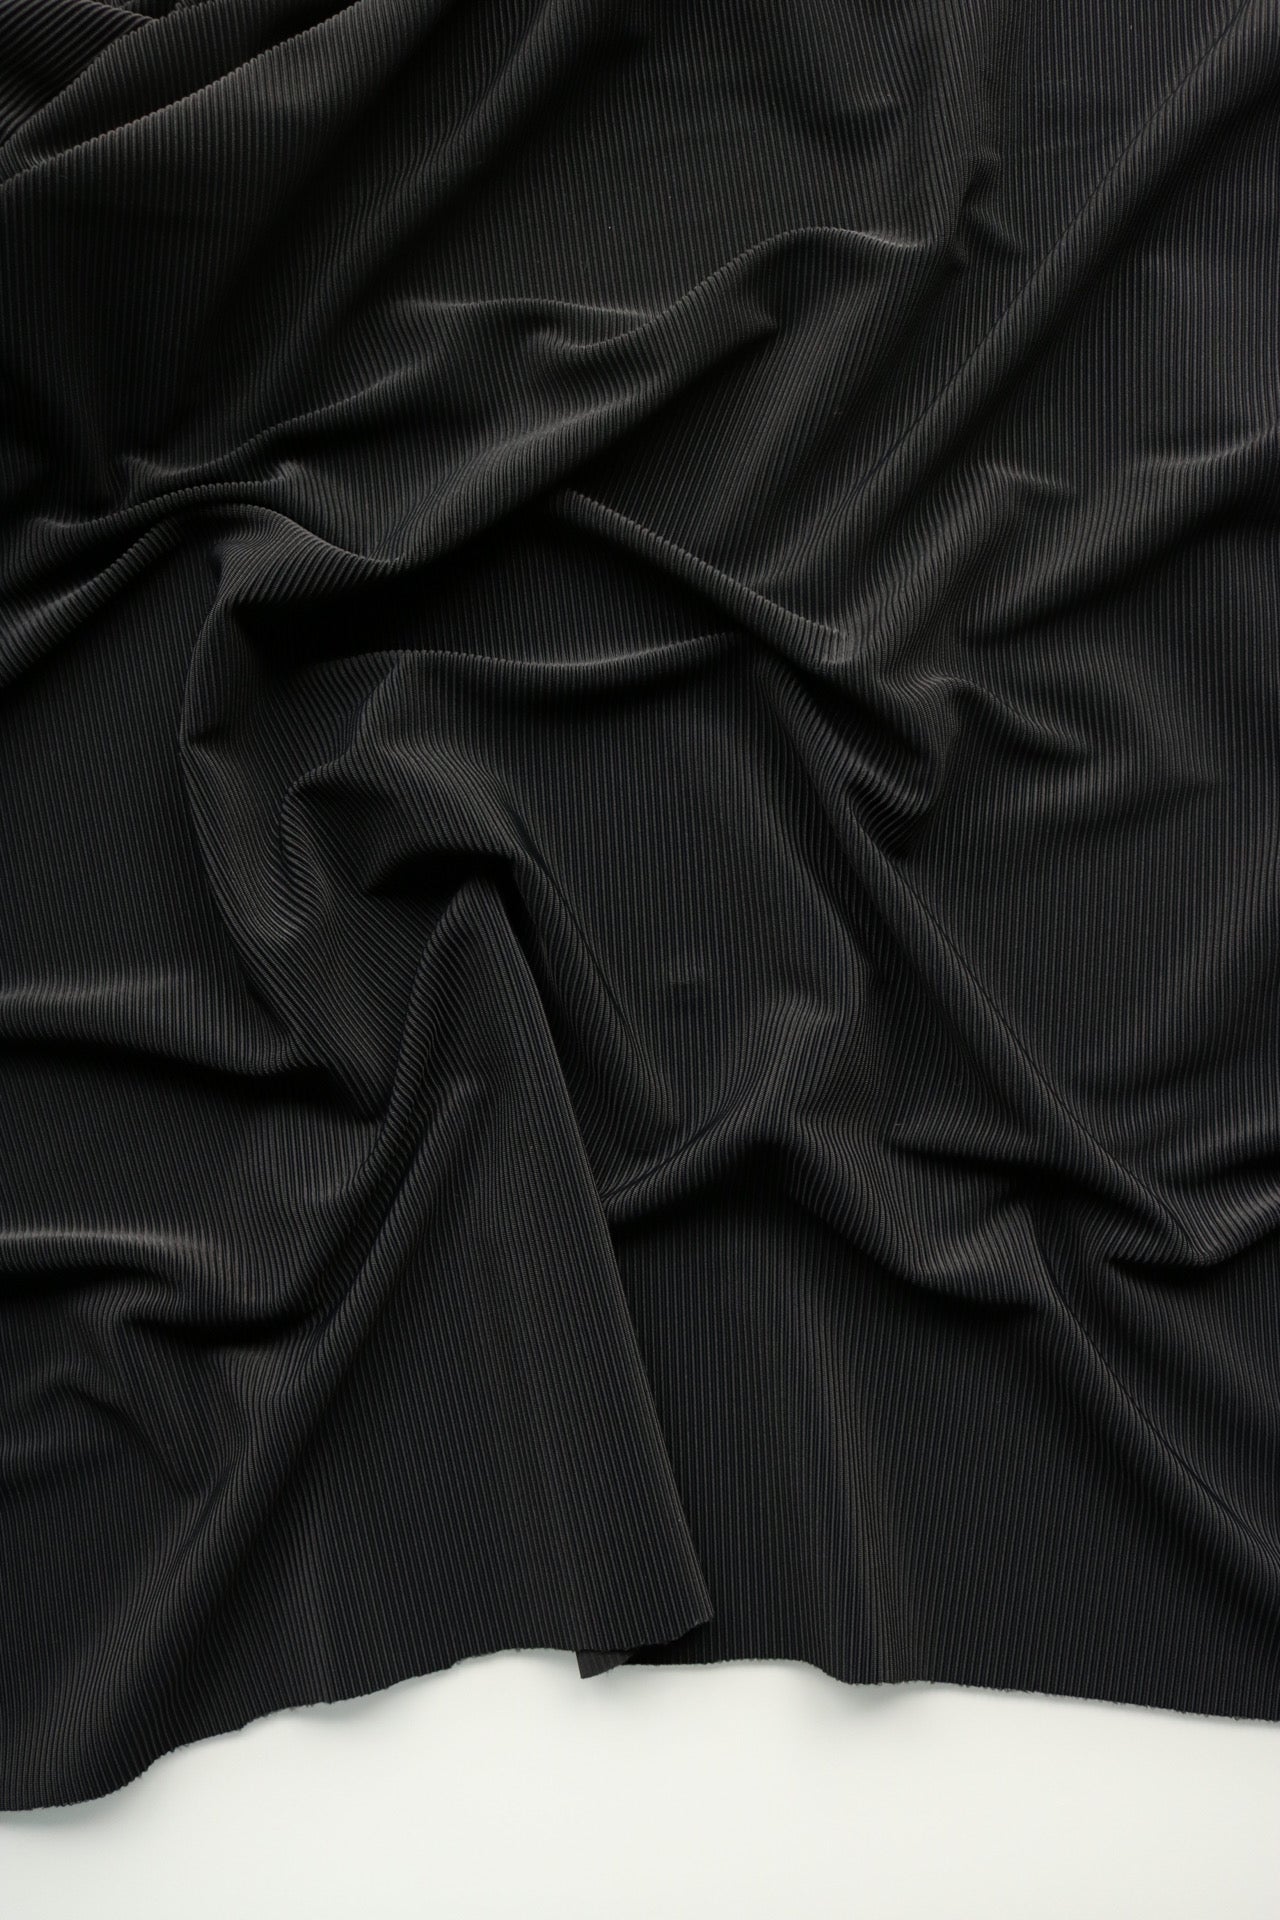 Fabric Thick Cotton Spandex, Spandex Winter Fabric